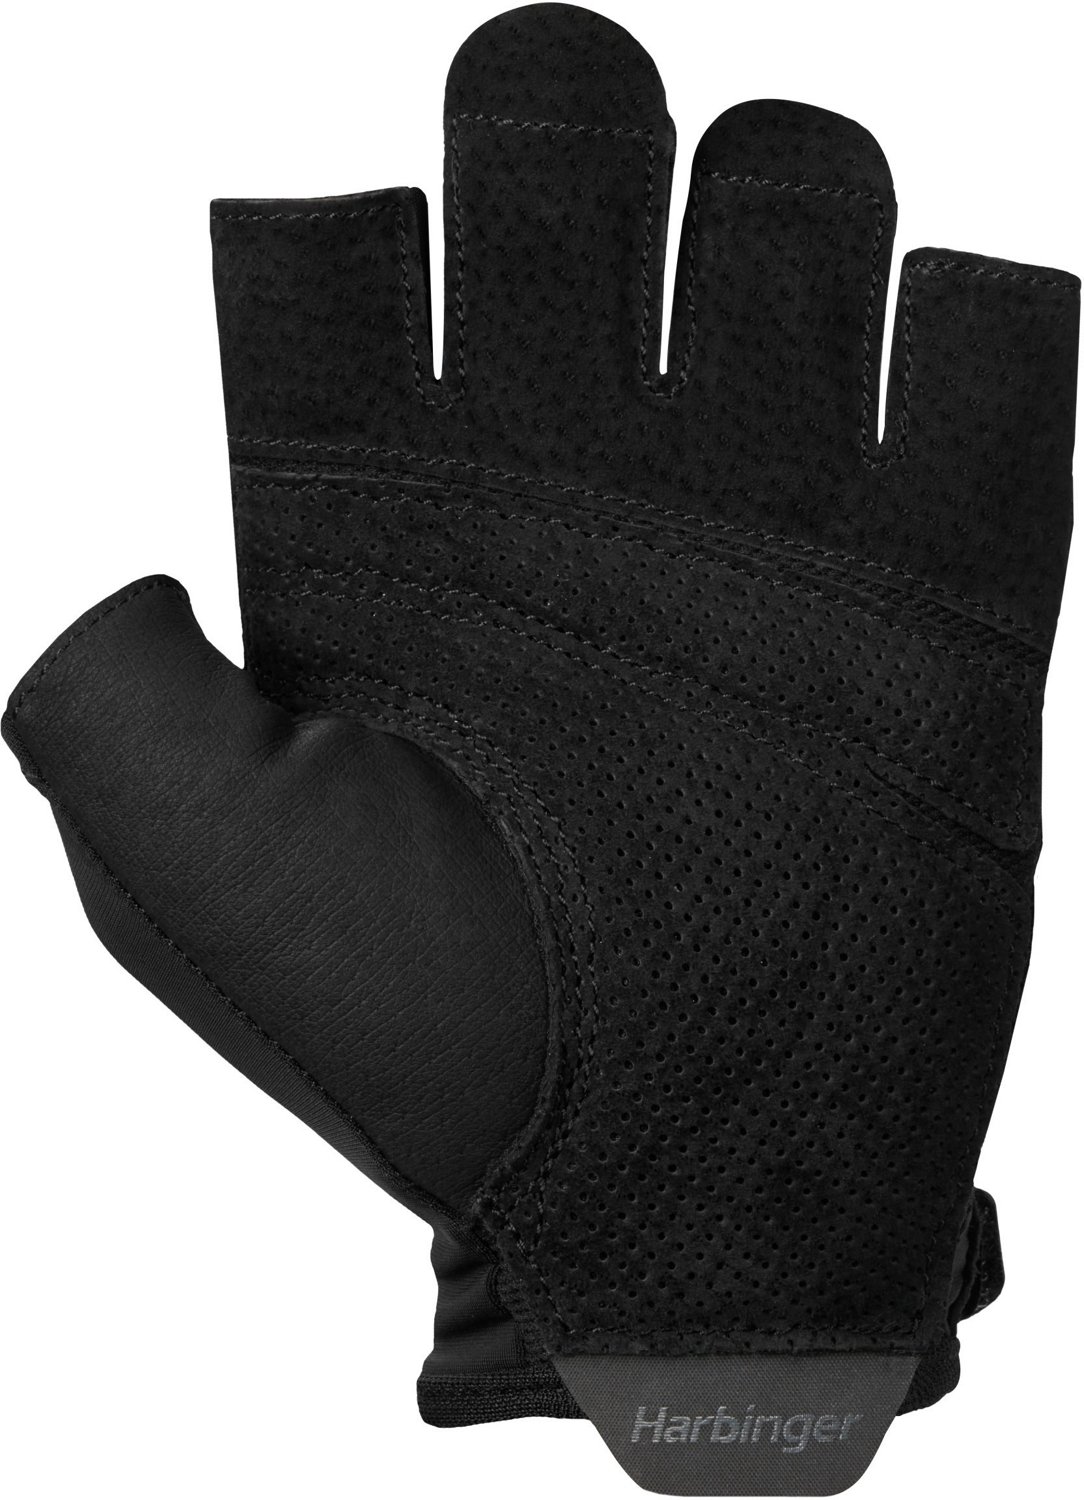 Harbinger Men's Pro Gloves | Free Shipping at Academy